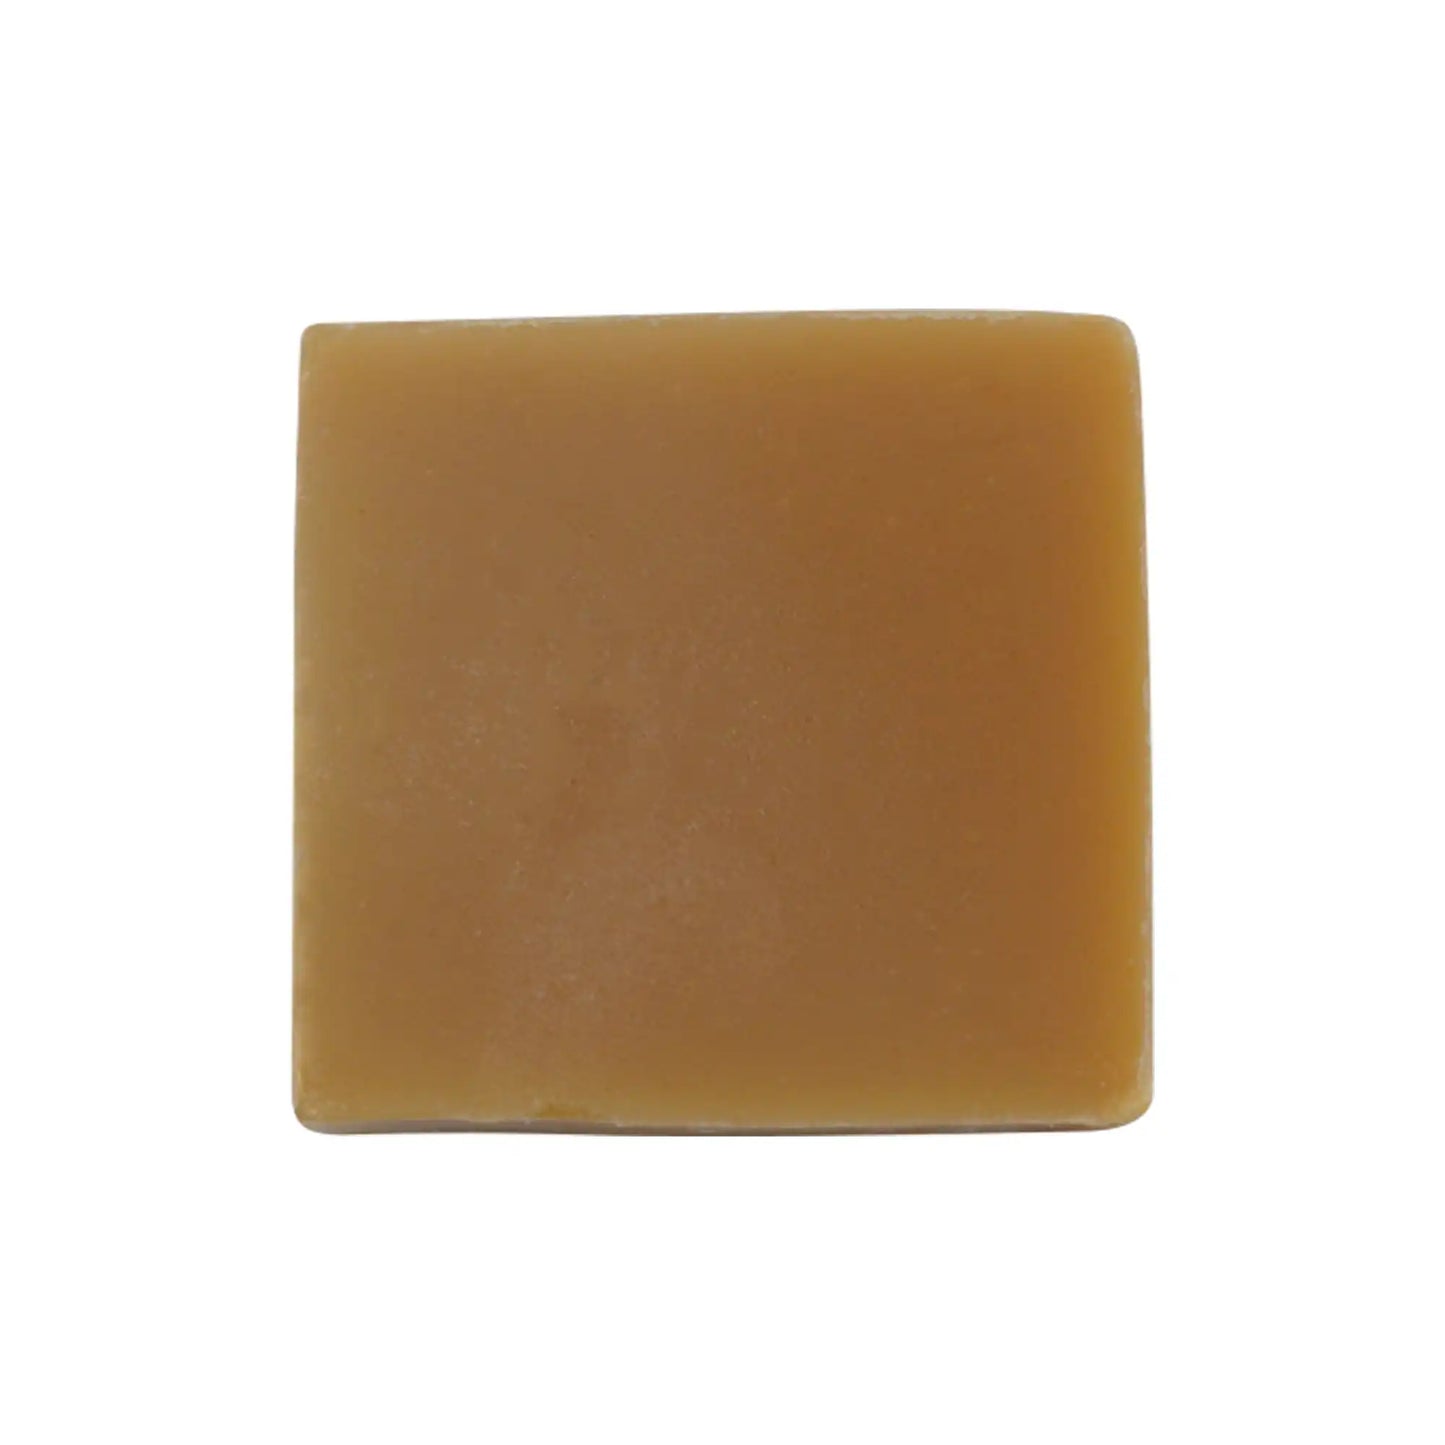 Natural Turmeric Soap